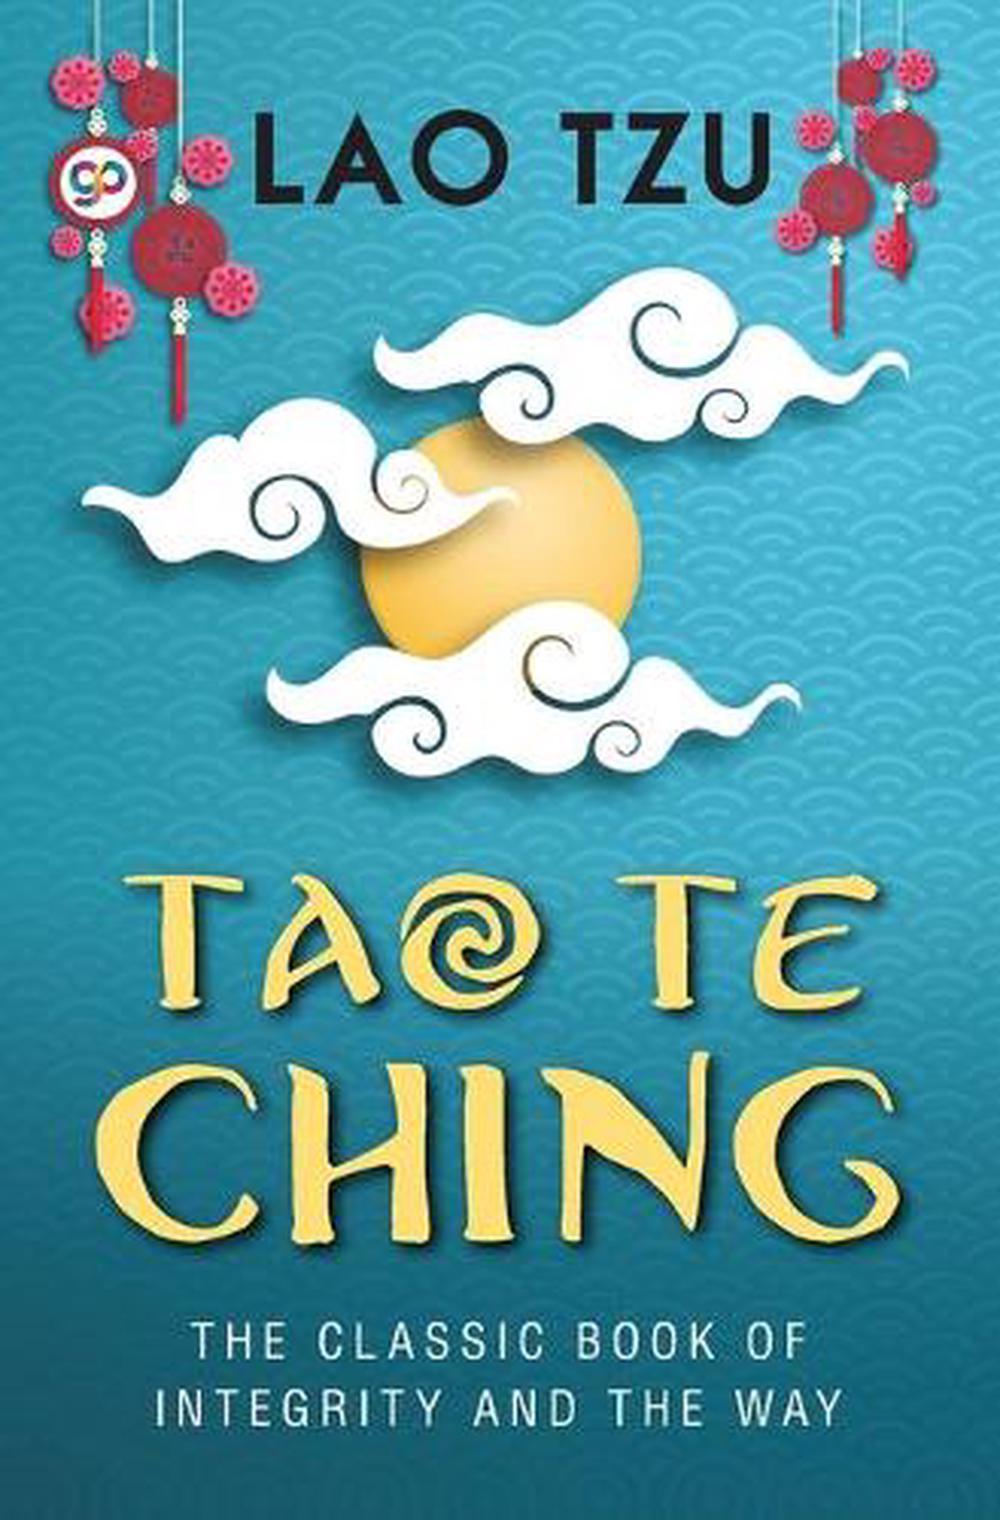 taoist i ching